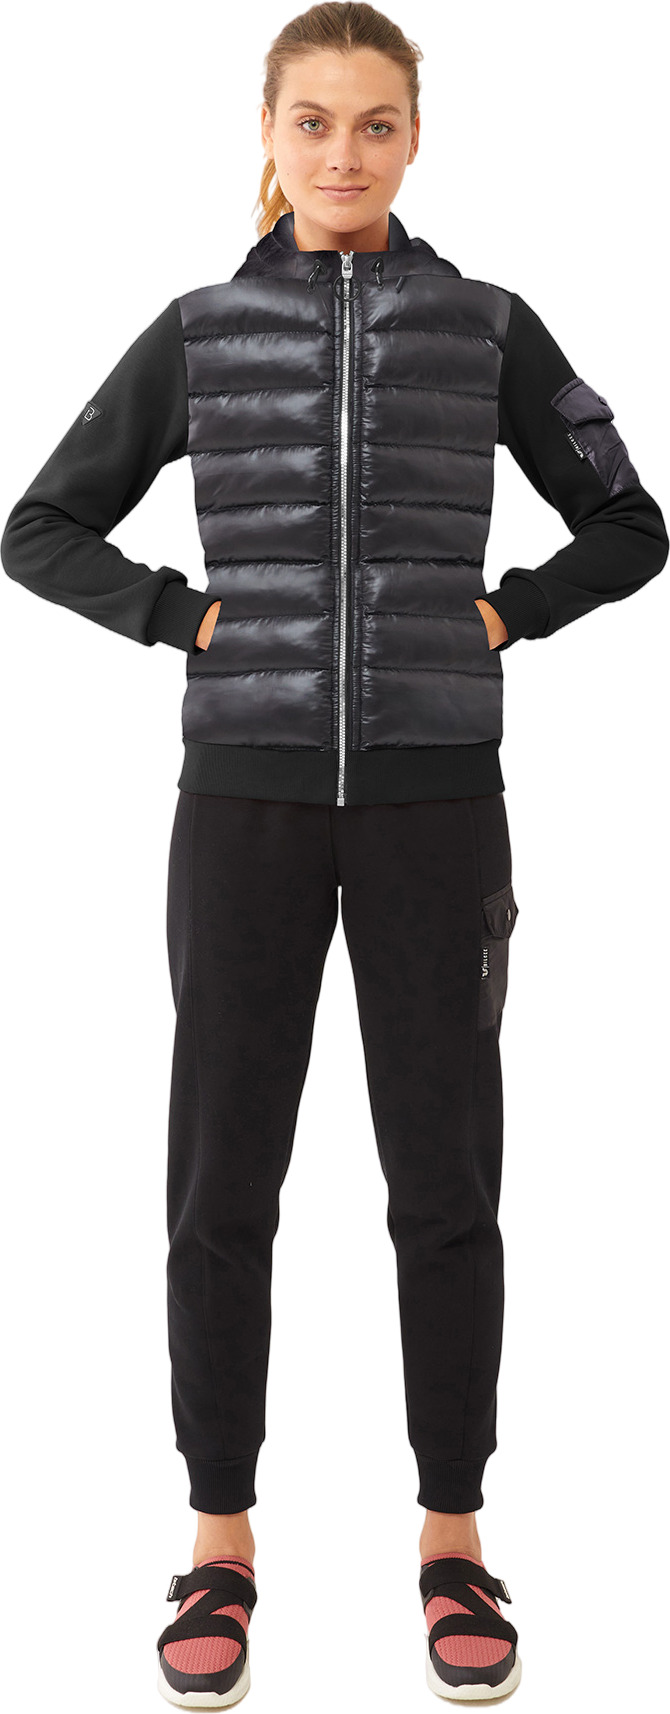 Костюм женский Bilcee Insulated sports suit черный 2XL